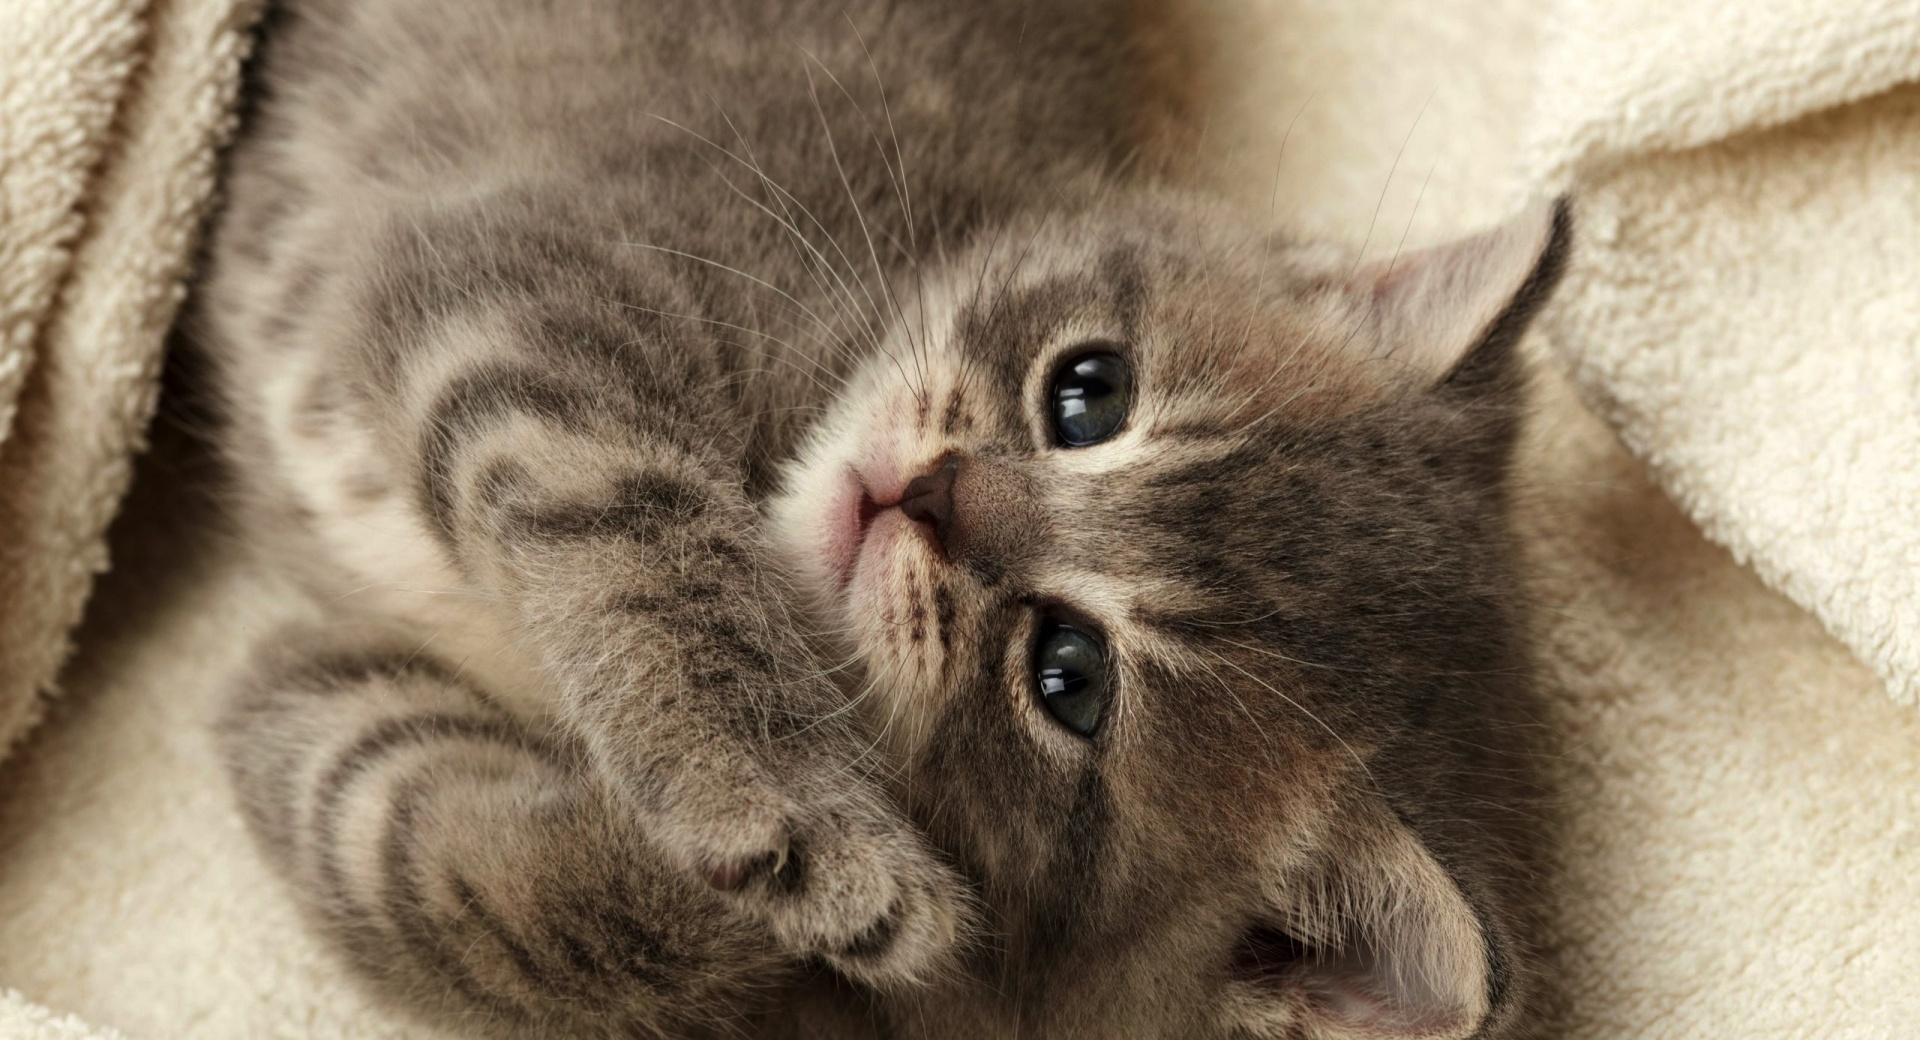 Cutest Kitten at 1024 x 1024 iPad size wallpapers HD quality